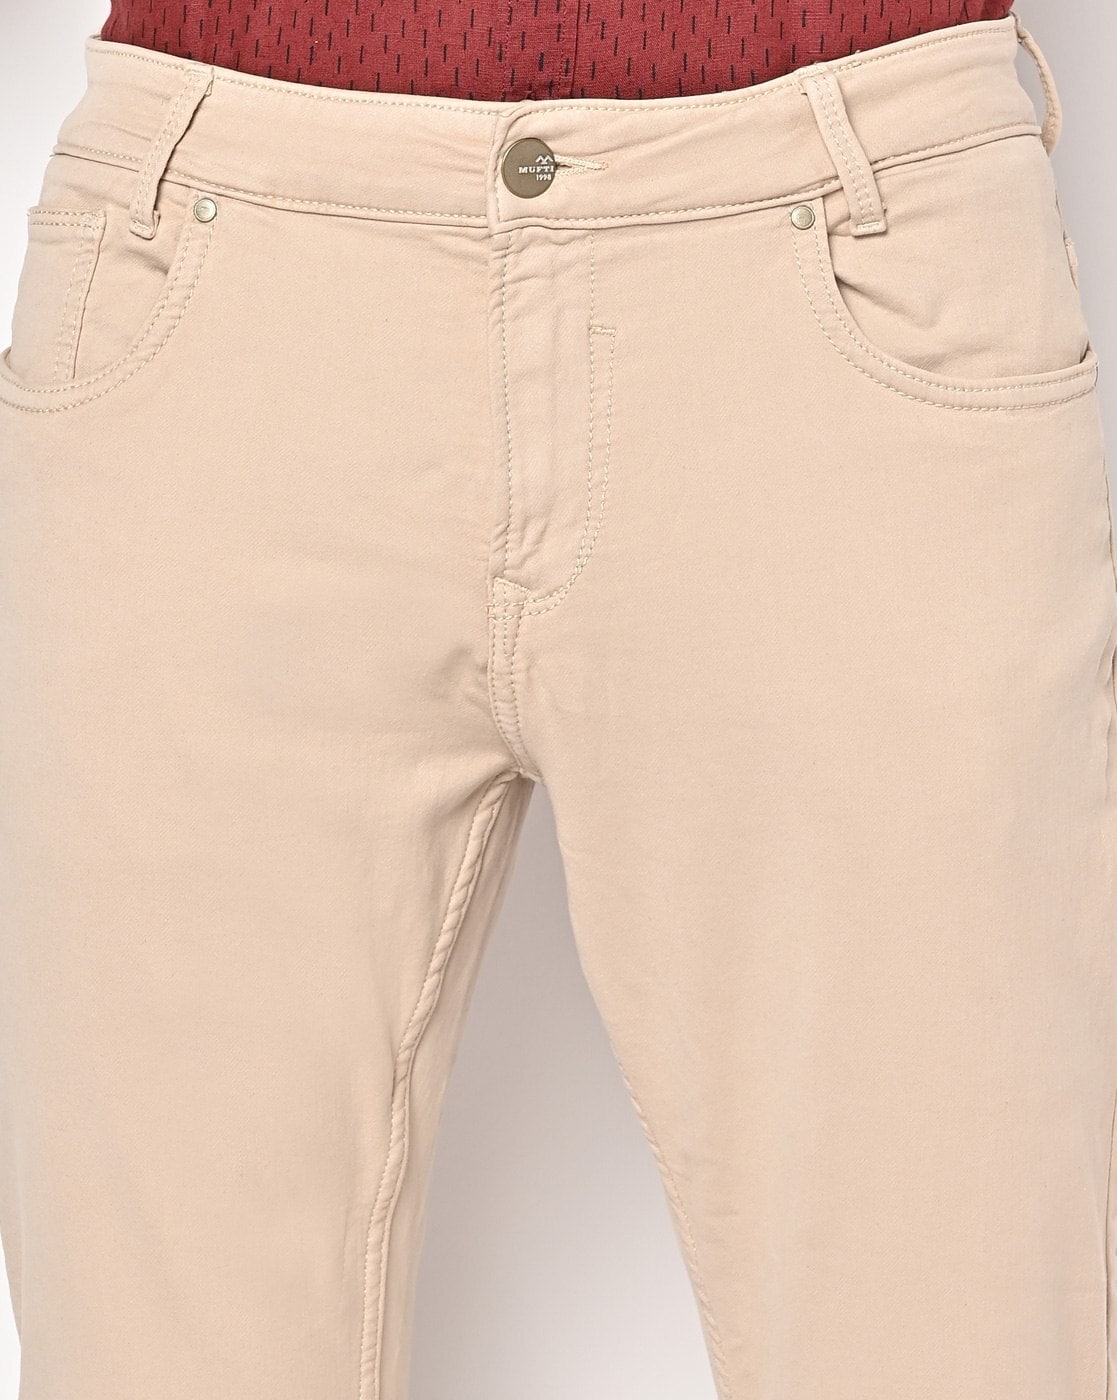 Buy Mufti Men's Slim Fit Casual Trousers (MFT-16916-G-11-BROWN_Brown_32) at  Amazon.in